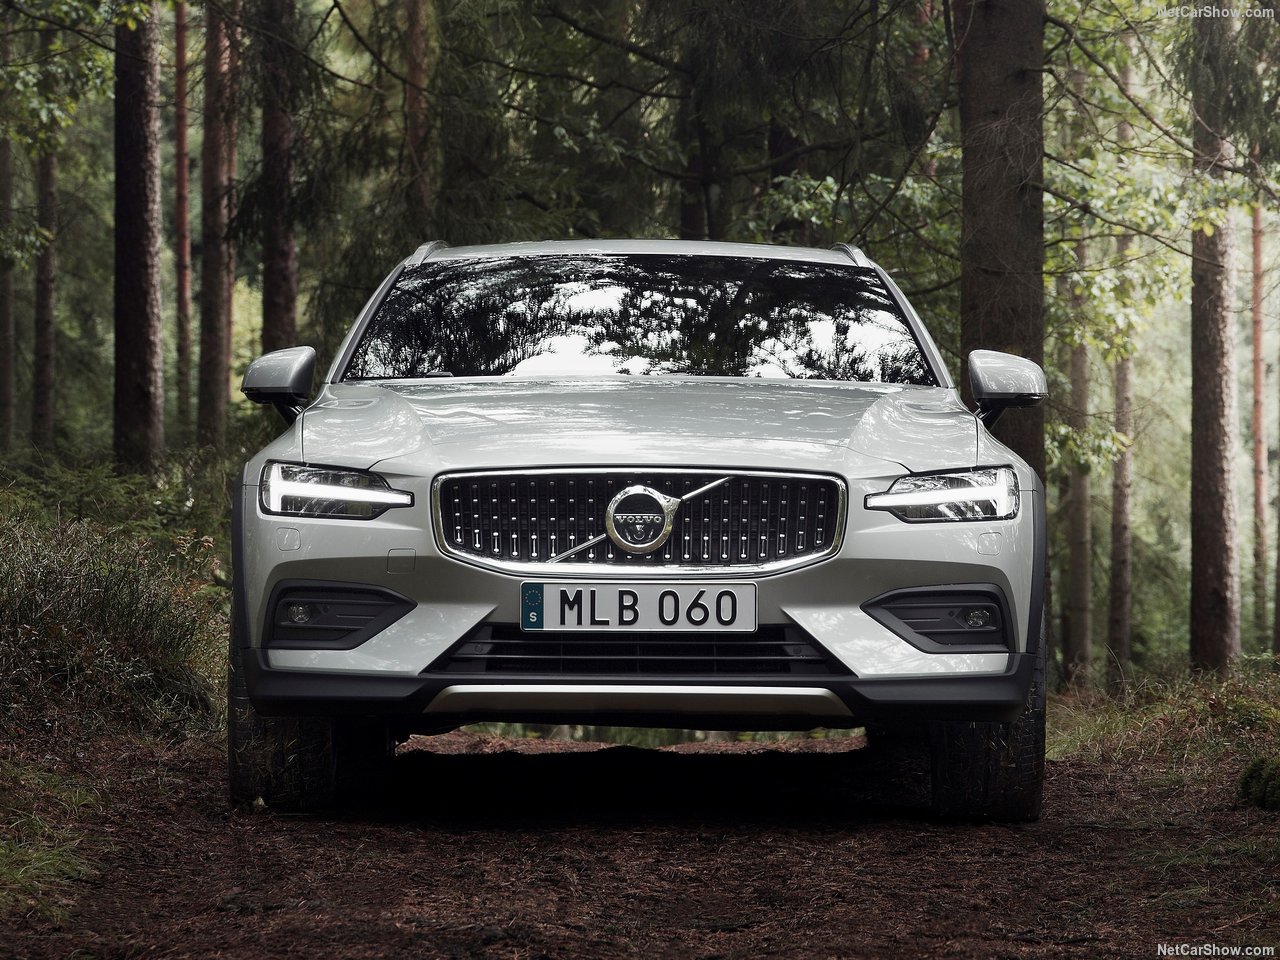 2019 Volvo V60 Cross Country örtüsünü kaldırdı! Yeni Volvo V60 Cross Country’nin özellikleri neler?